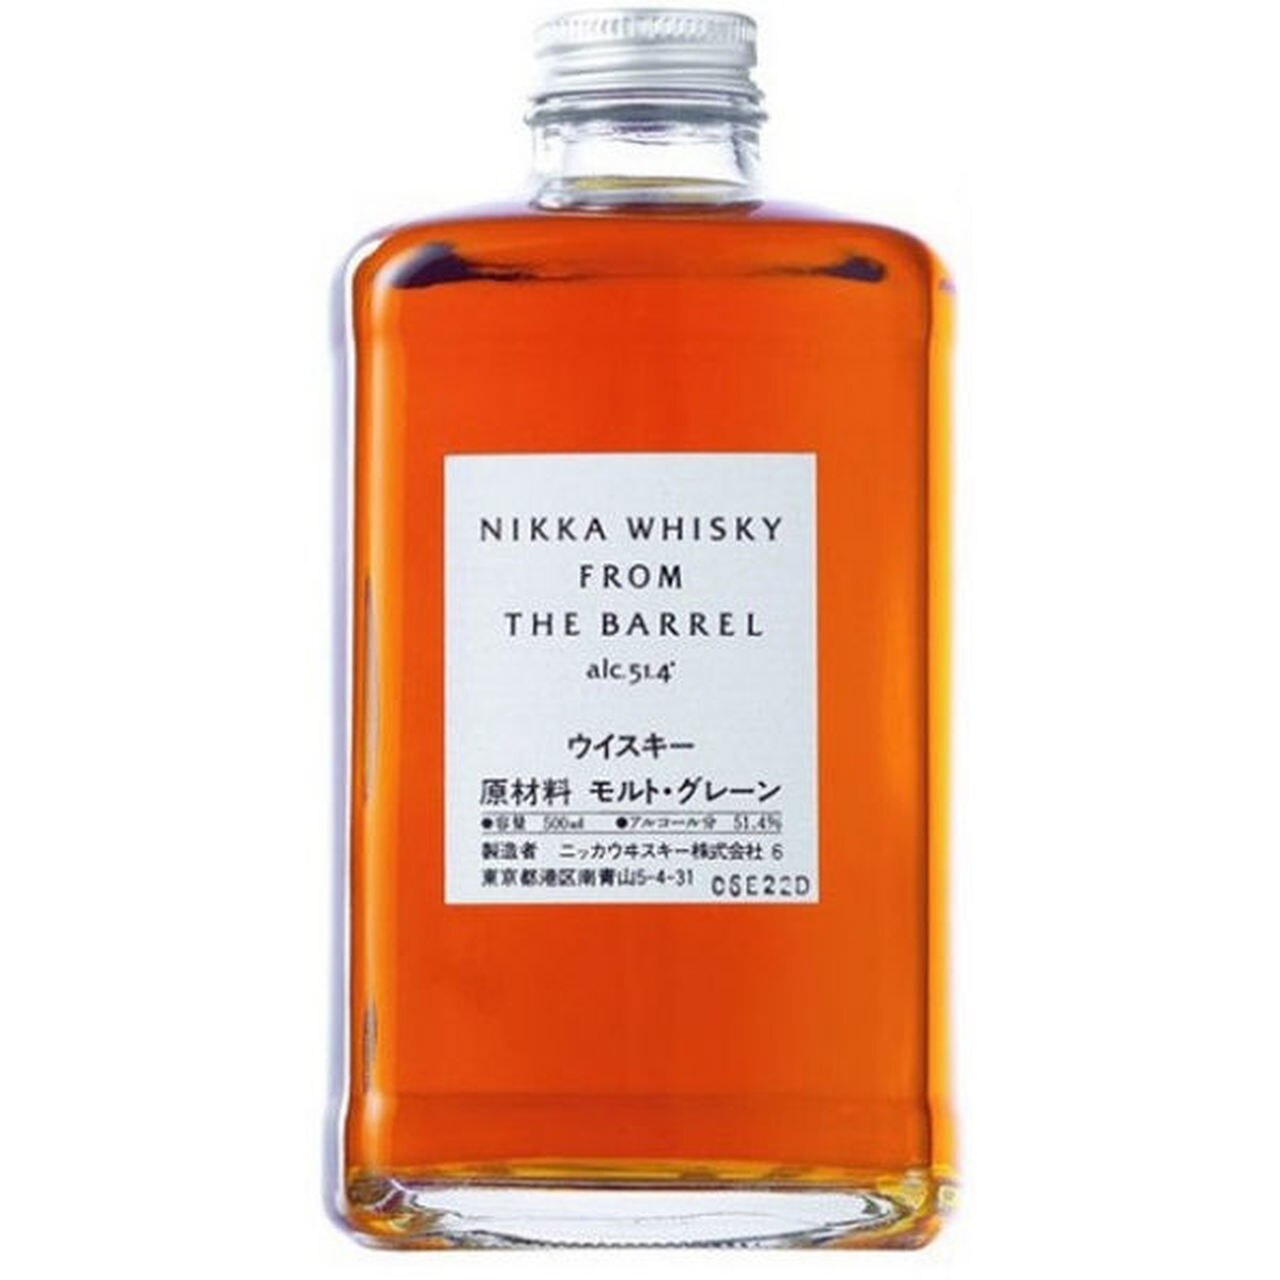 nikka whiskey from barrel